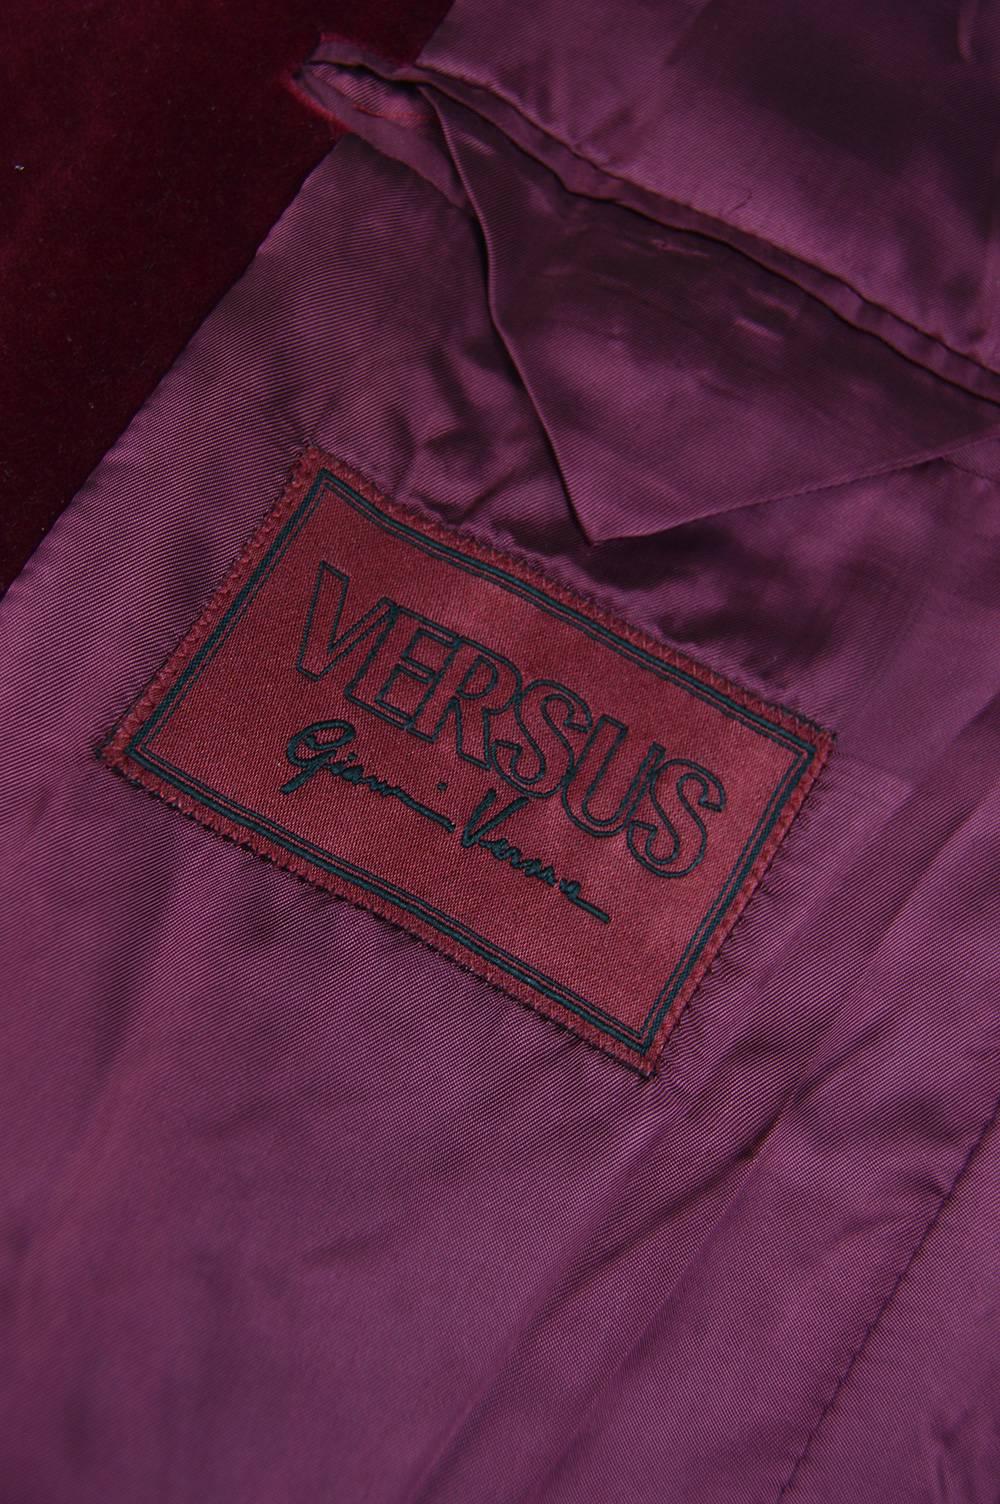 Gianni Versace Versus Men's Dark Red Velvet Vintage Blazer Jacket, 1990s For Sale 3